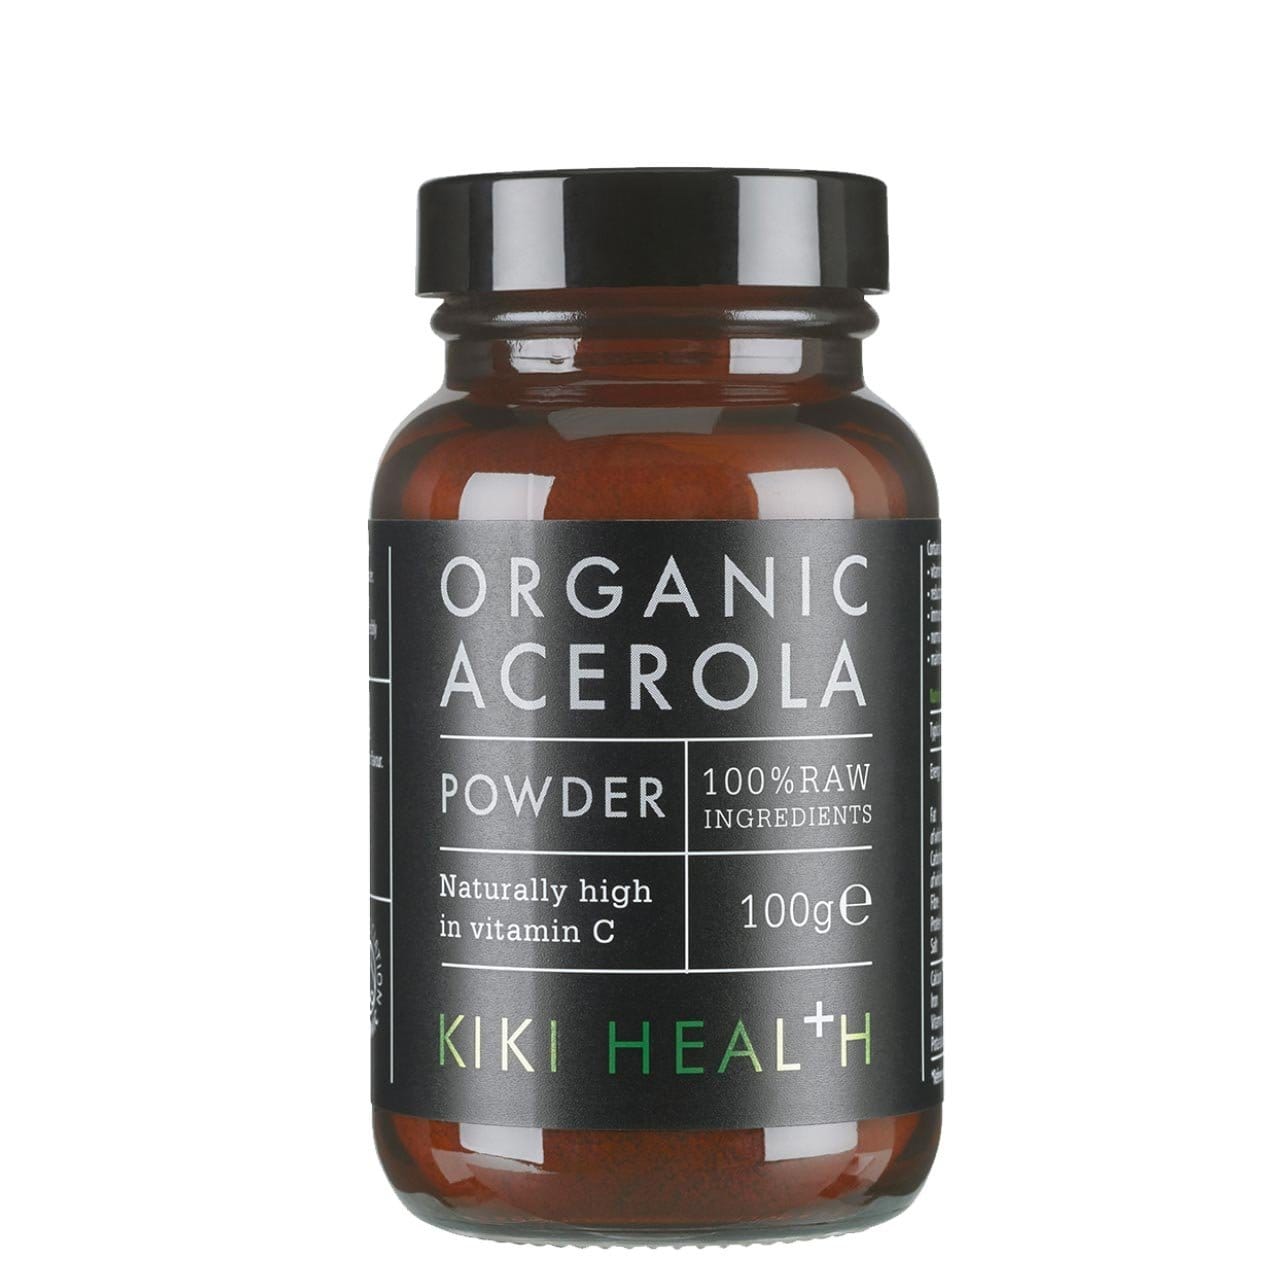 Kiki Health Organic Acerola Powder, 100g